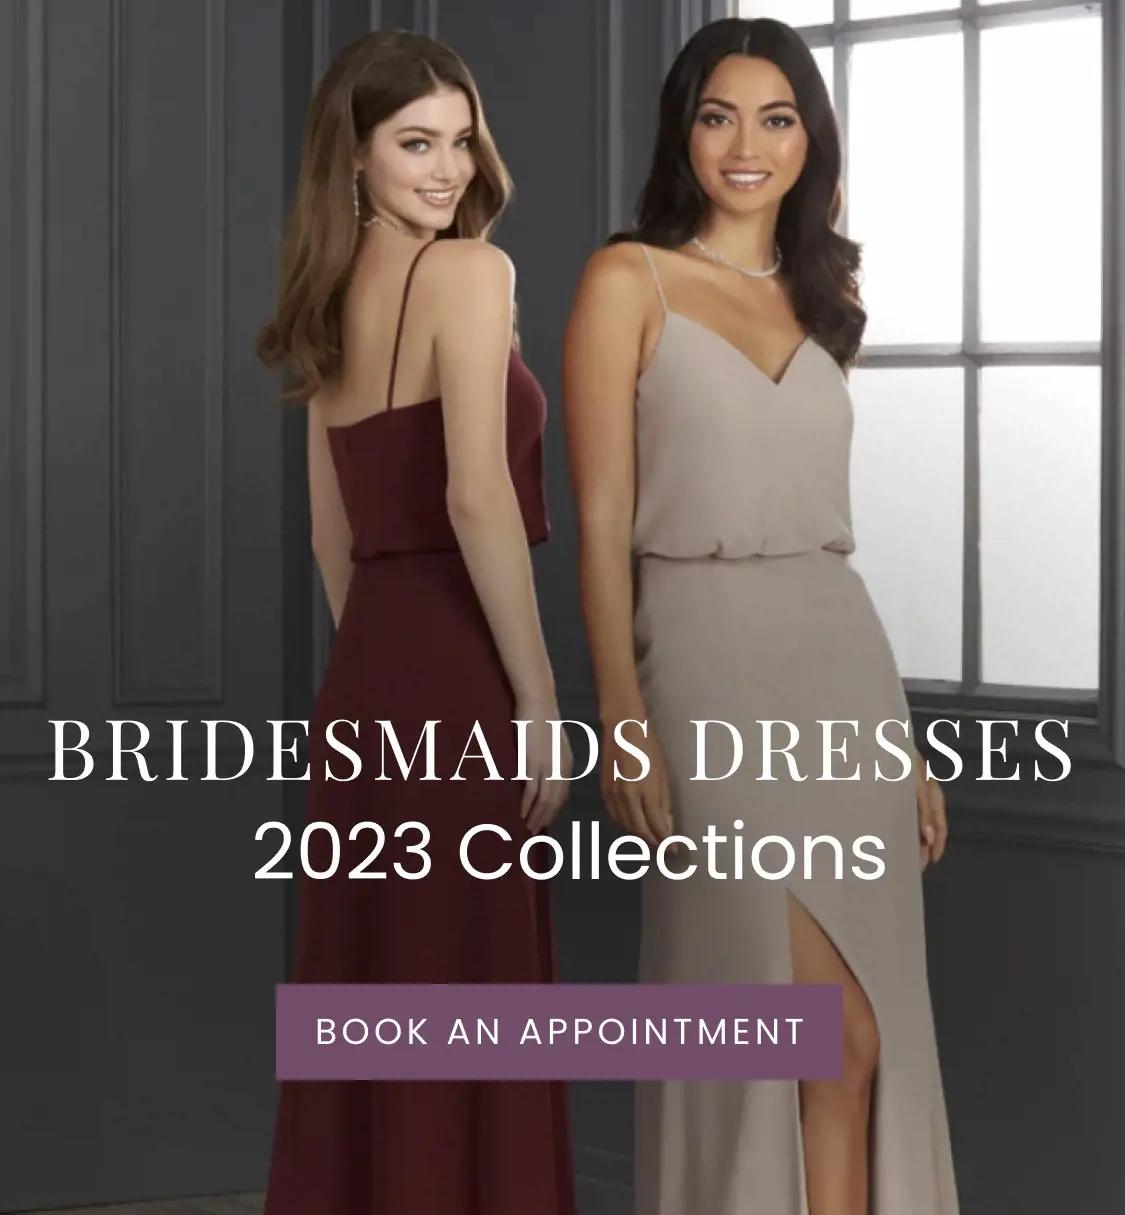 Models Wearing Bridesmaids Dresses